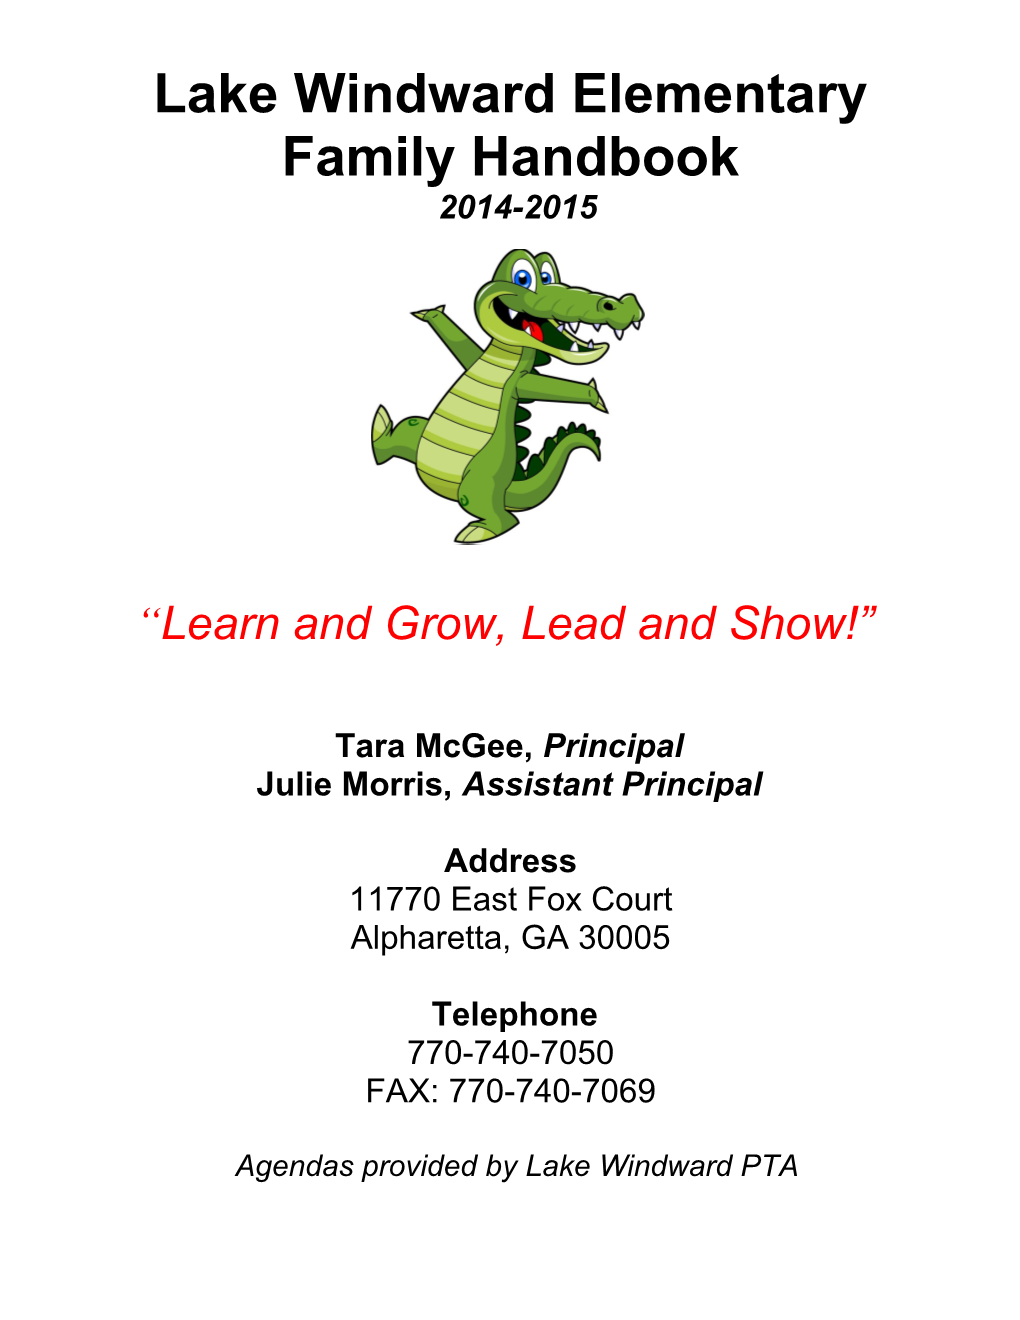 Lake Windward Elementary Family Handbook